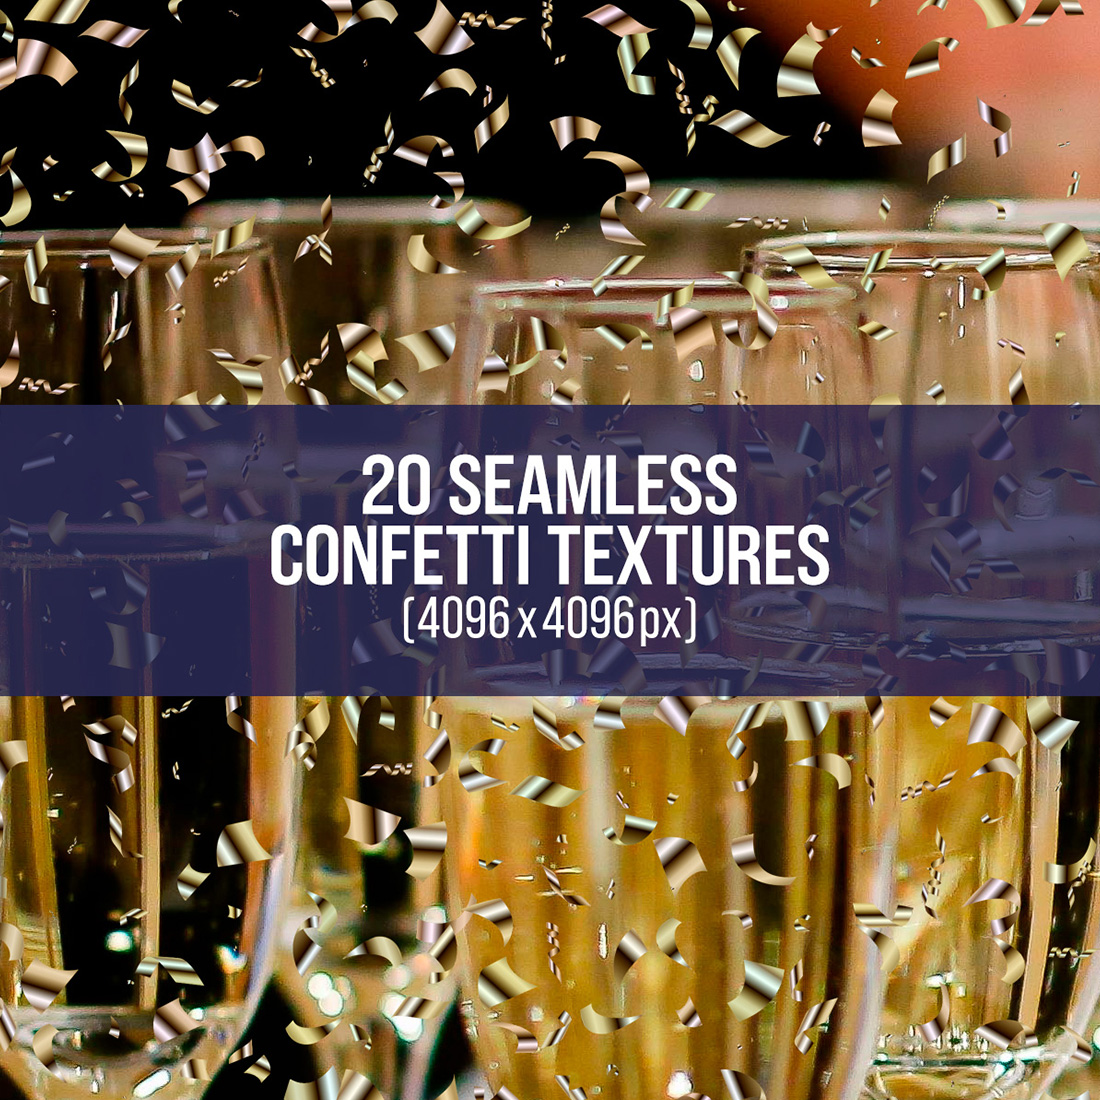 Beautiful Confetti Textures Design cover image.